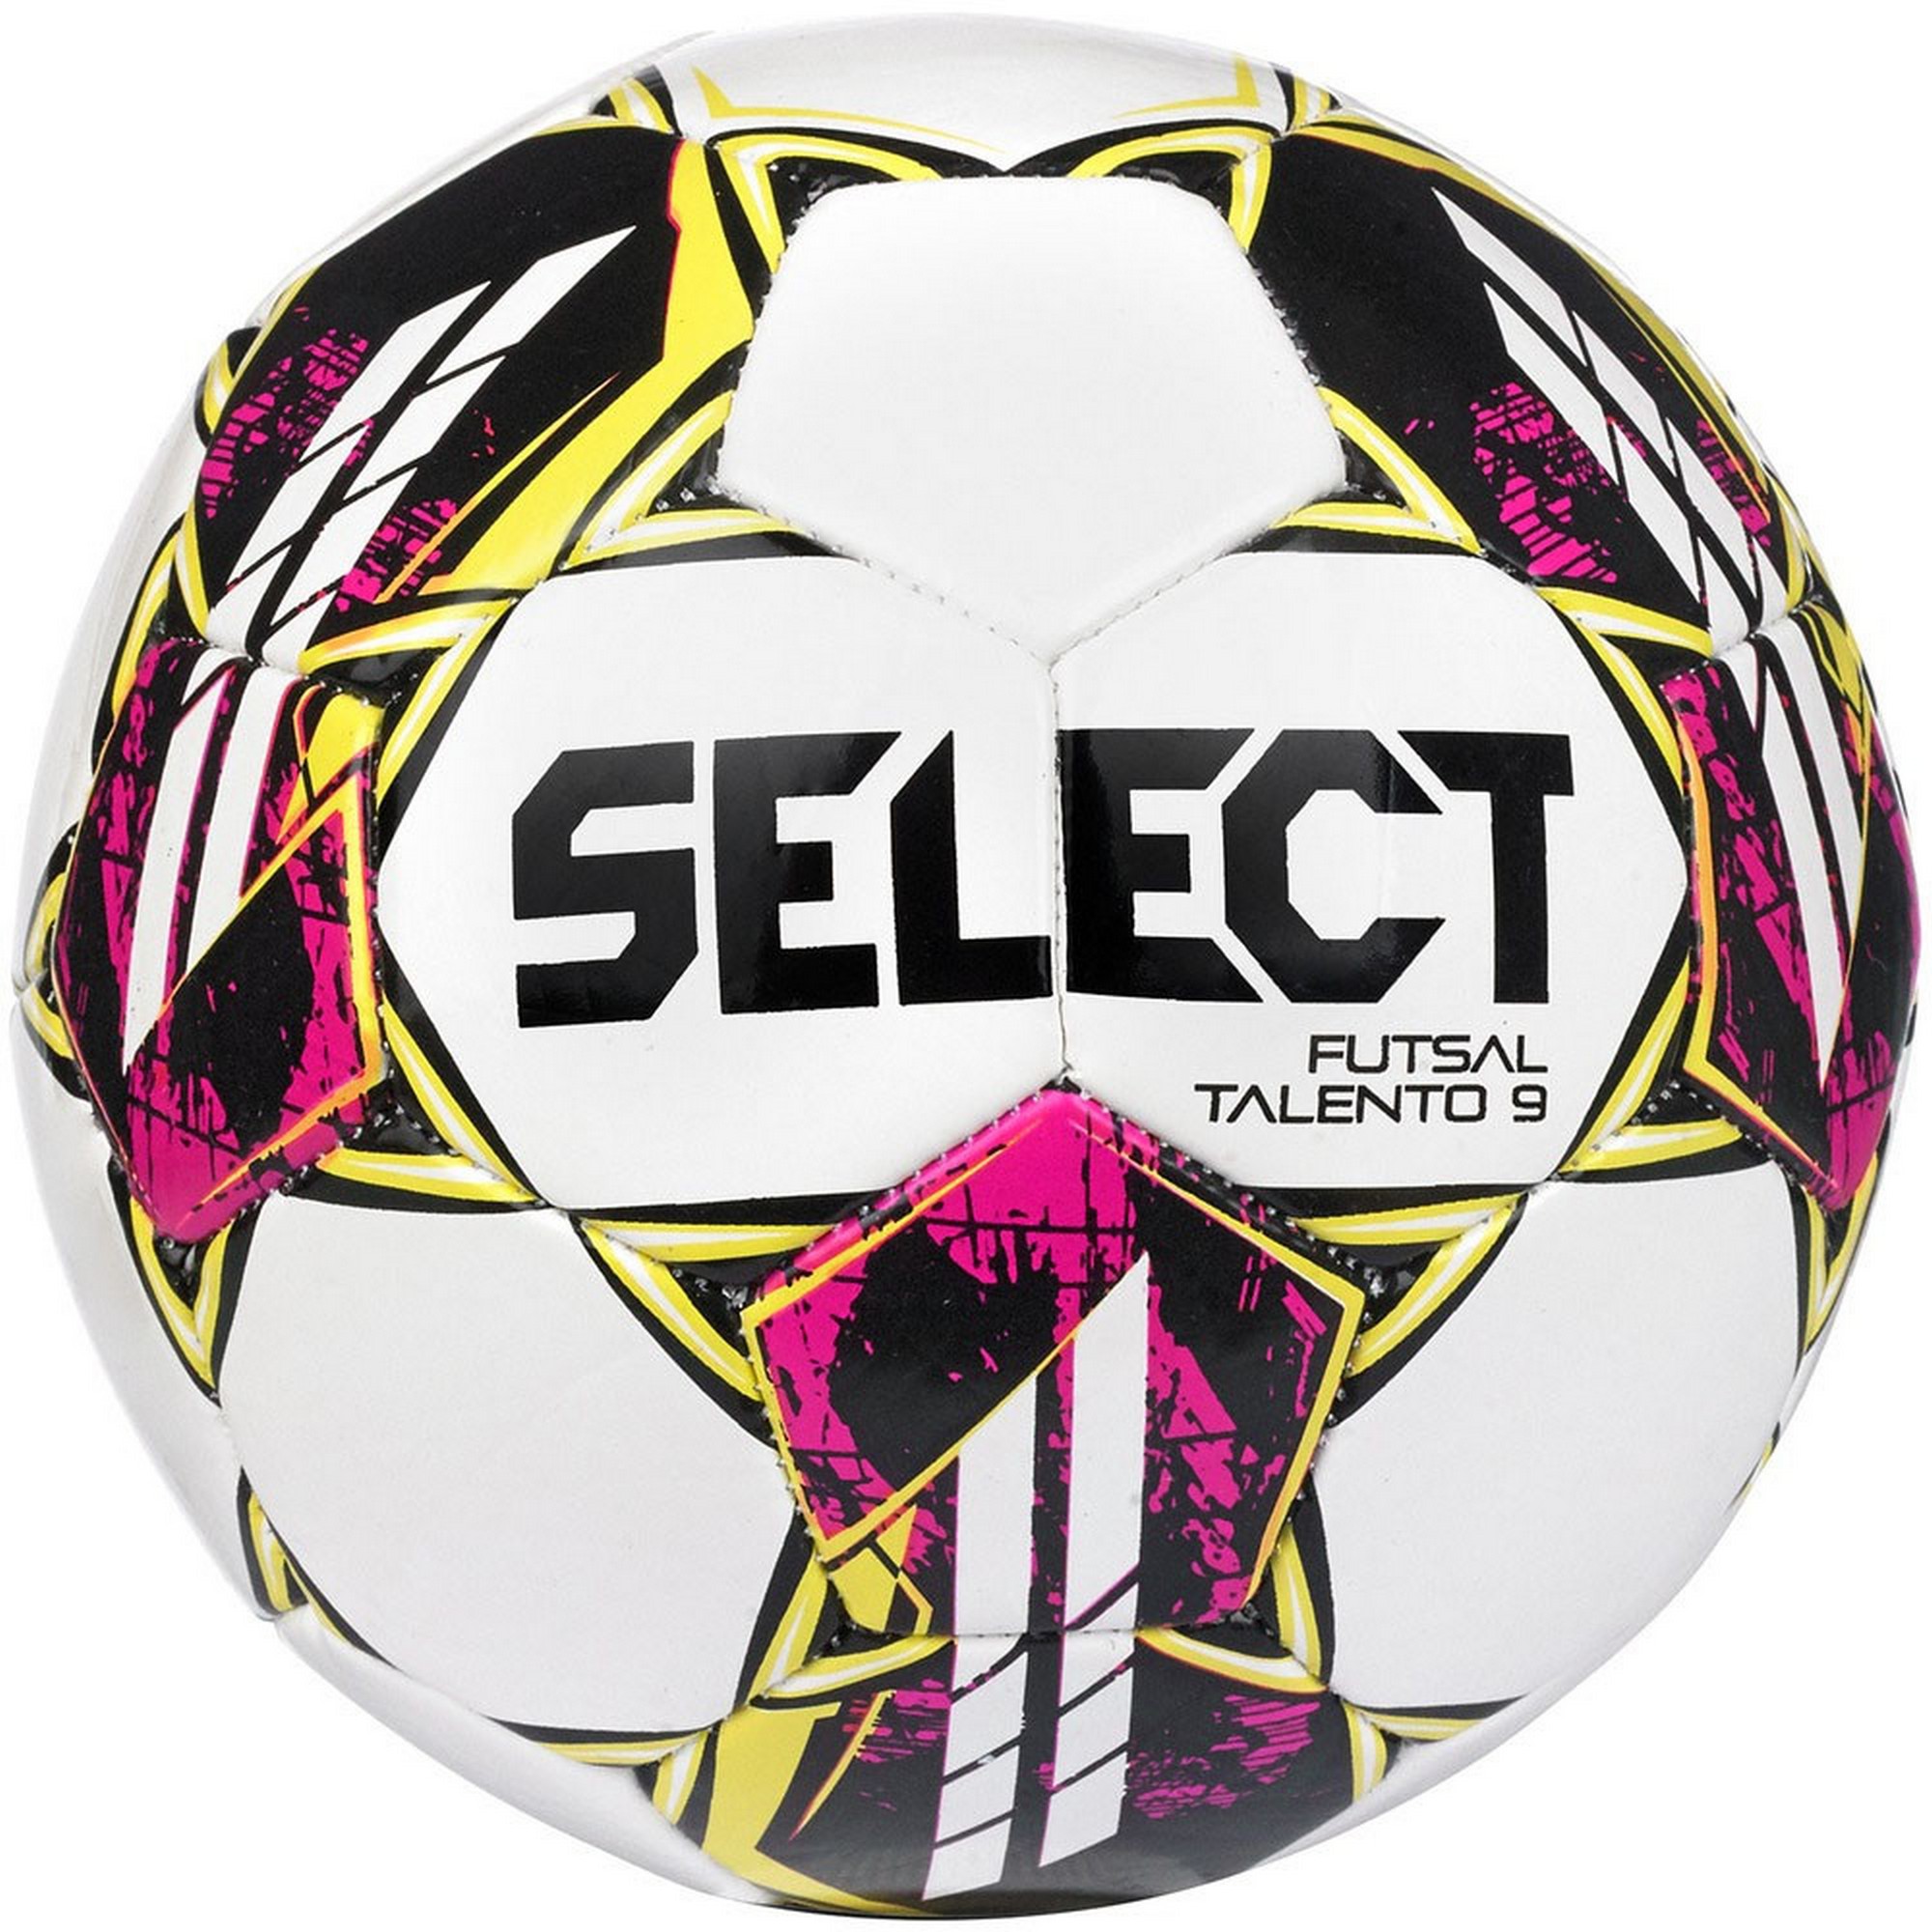   Select Futsal Talento 9 V22 1060460005 .2